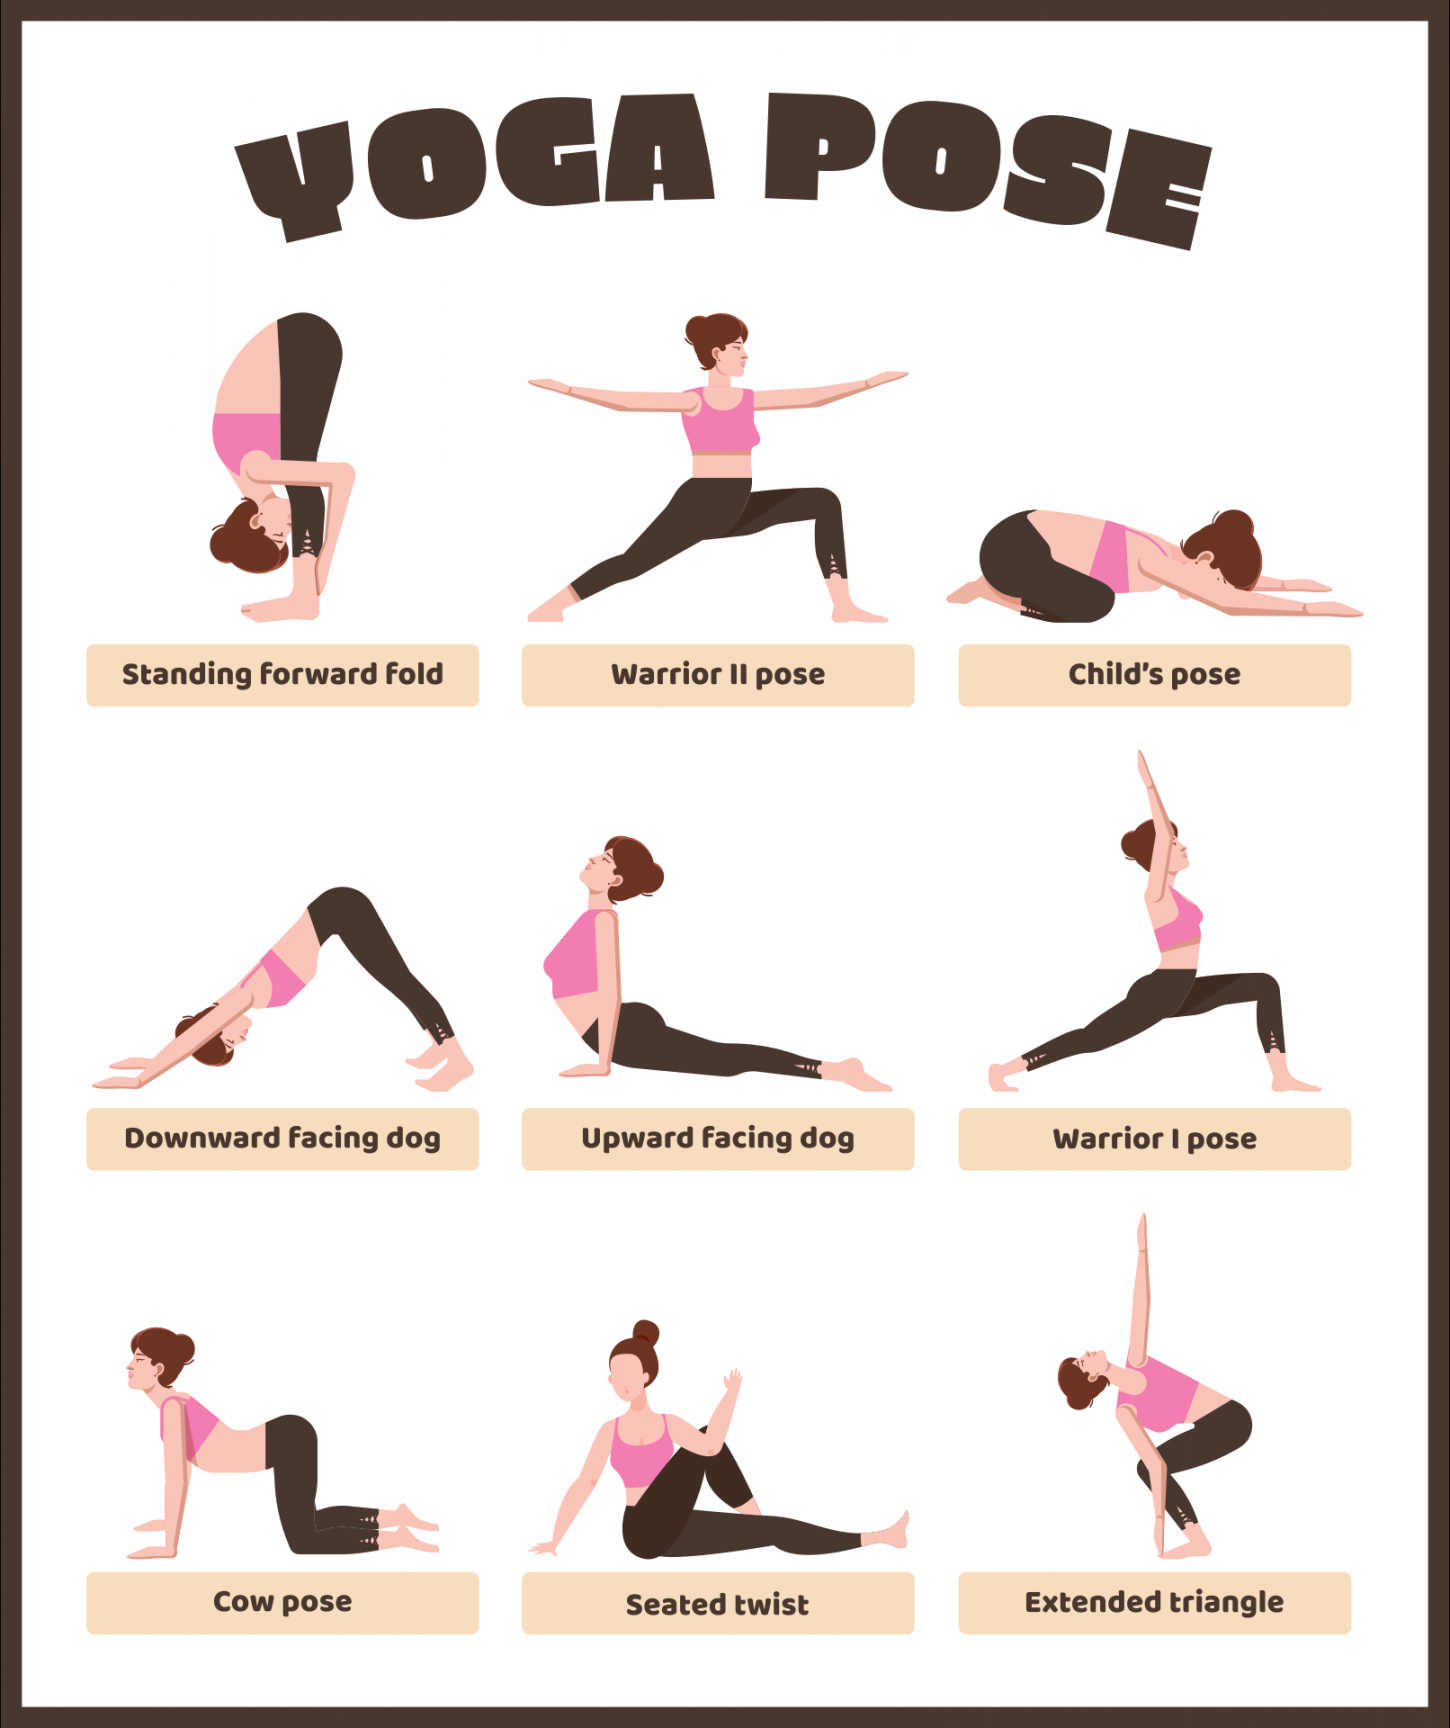 More Free Yoga Postures | Yoga Bridge Pose for Strengthening Back